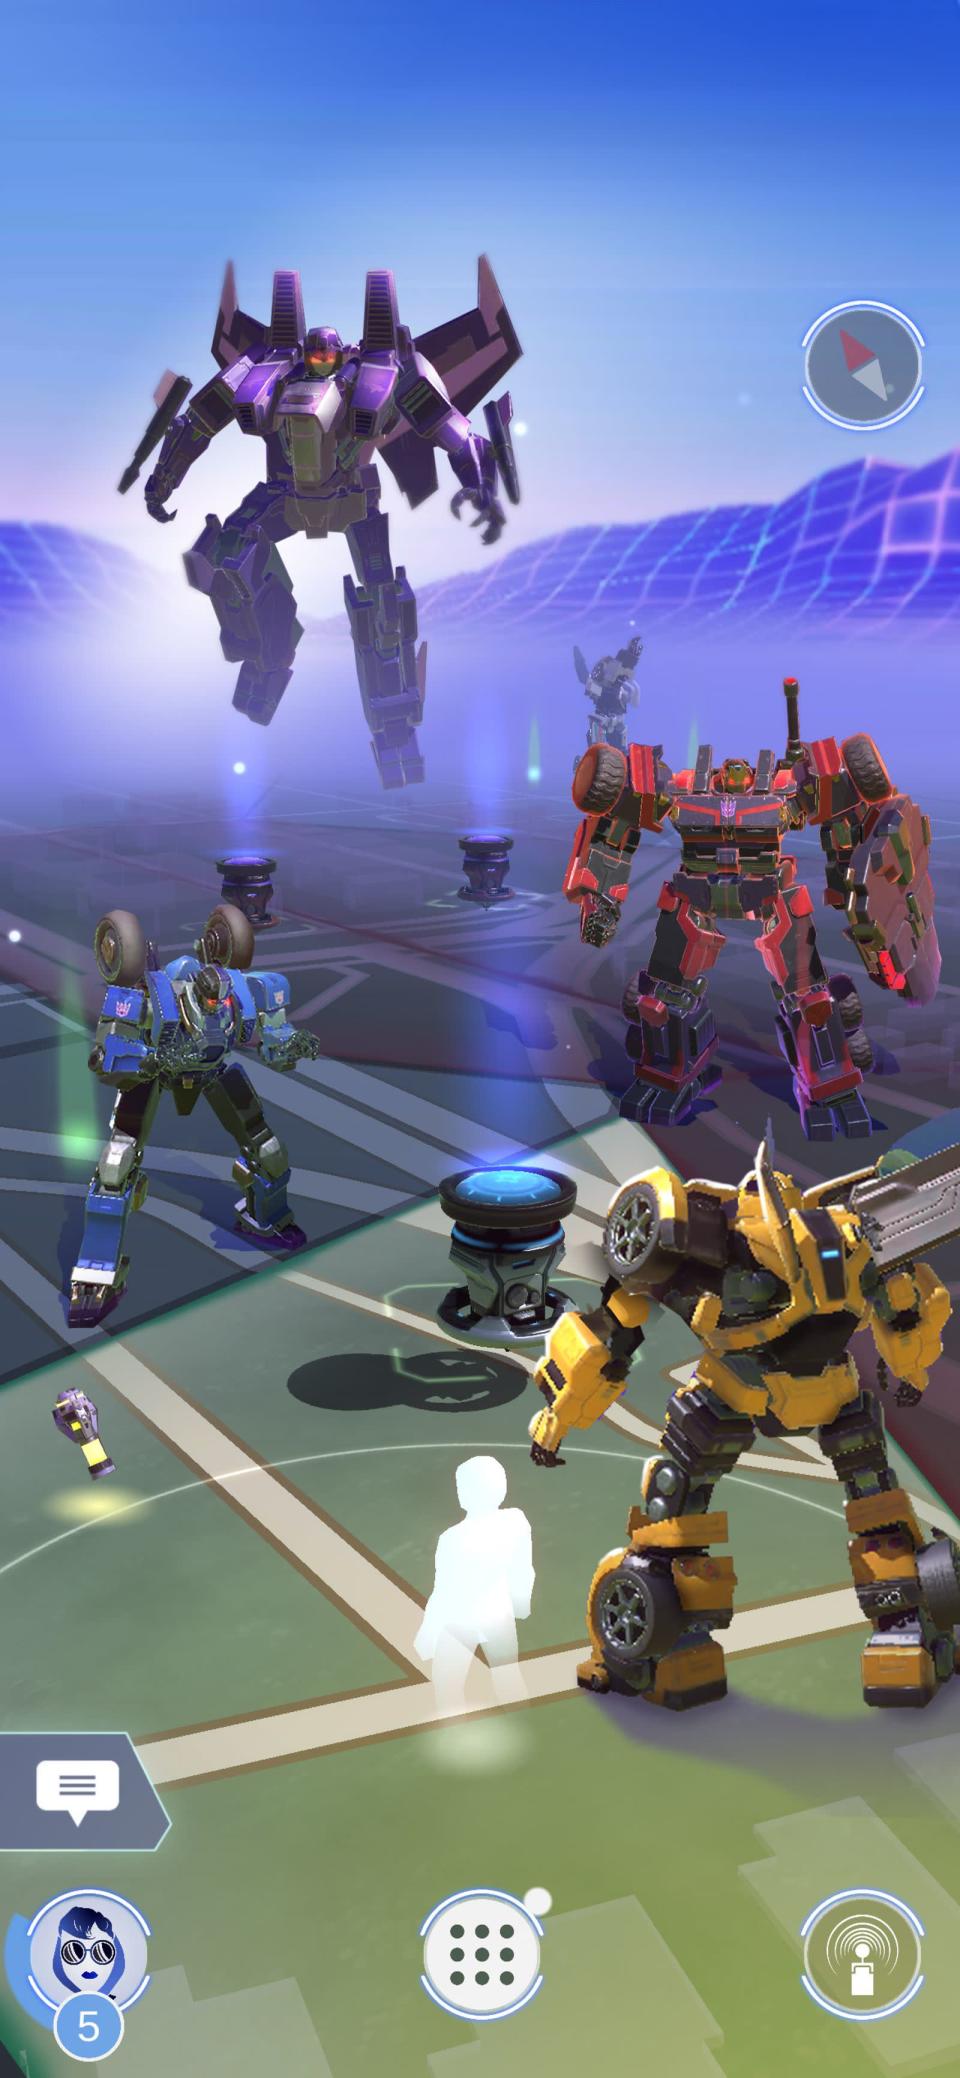 &quot;Transformers: Heavy Metal&quot; kombiniert reale und digitale Welt in einem Augmented Reality-Mobile Game. (Bild: Niantic/Hasbro)